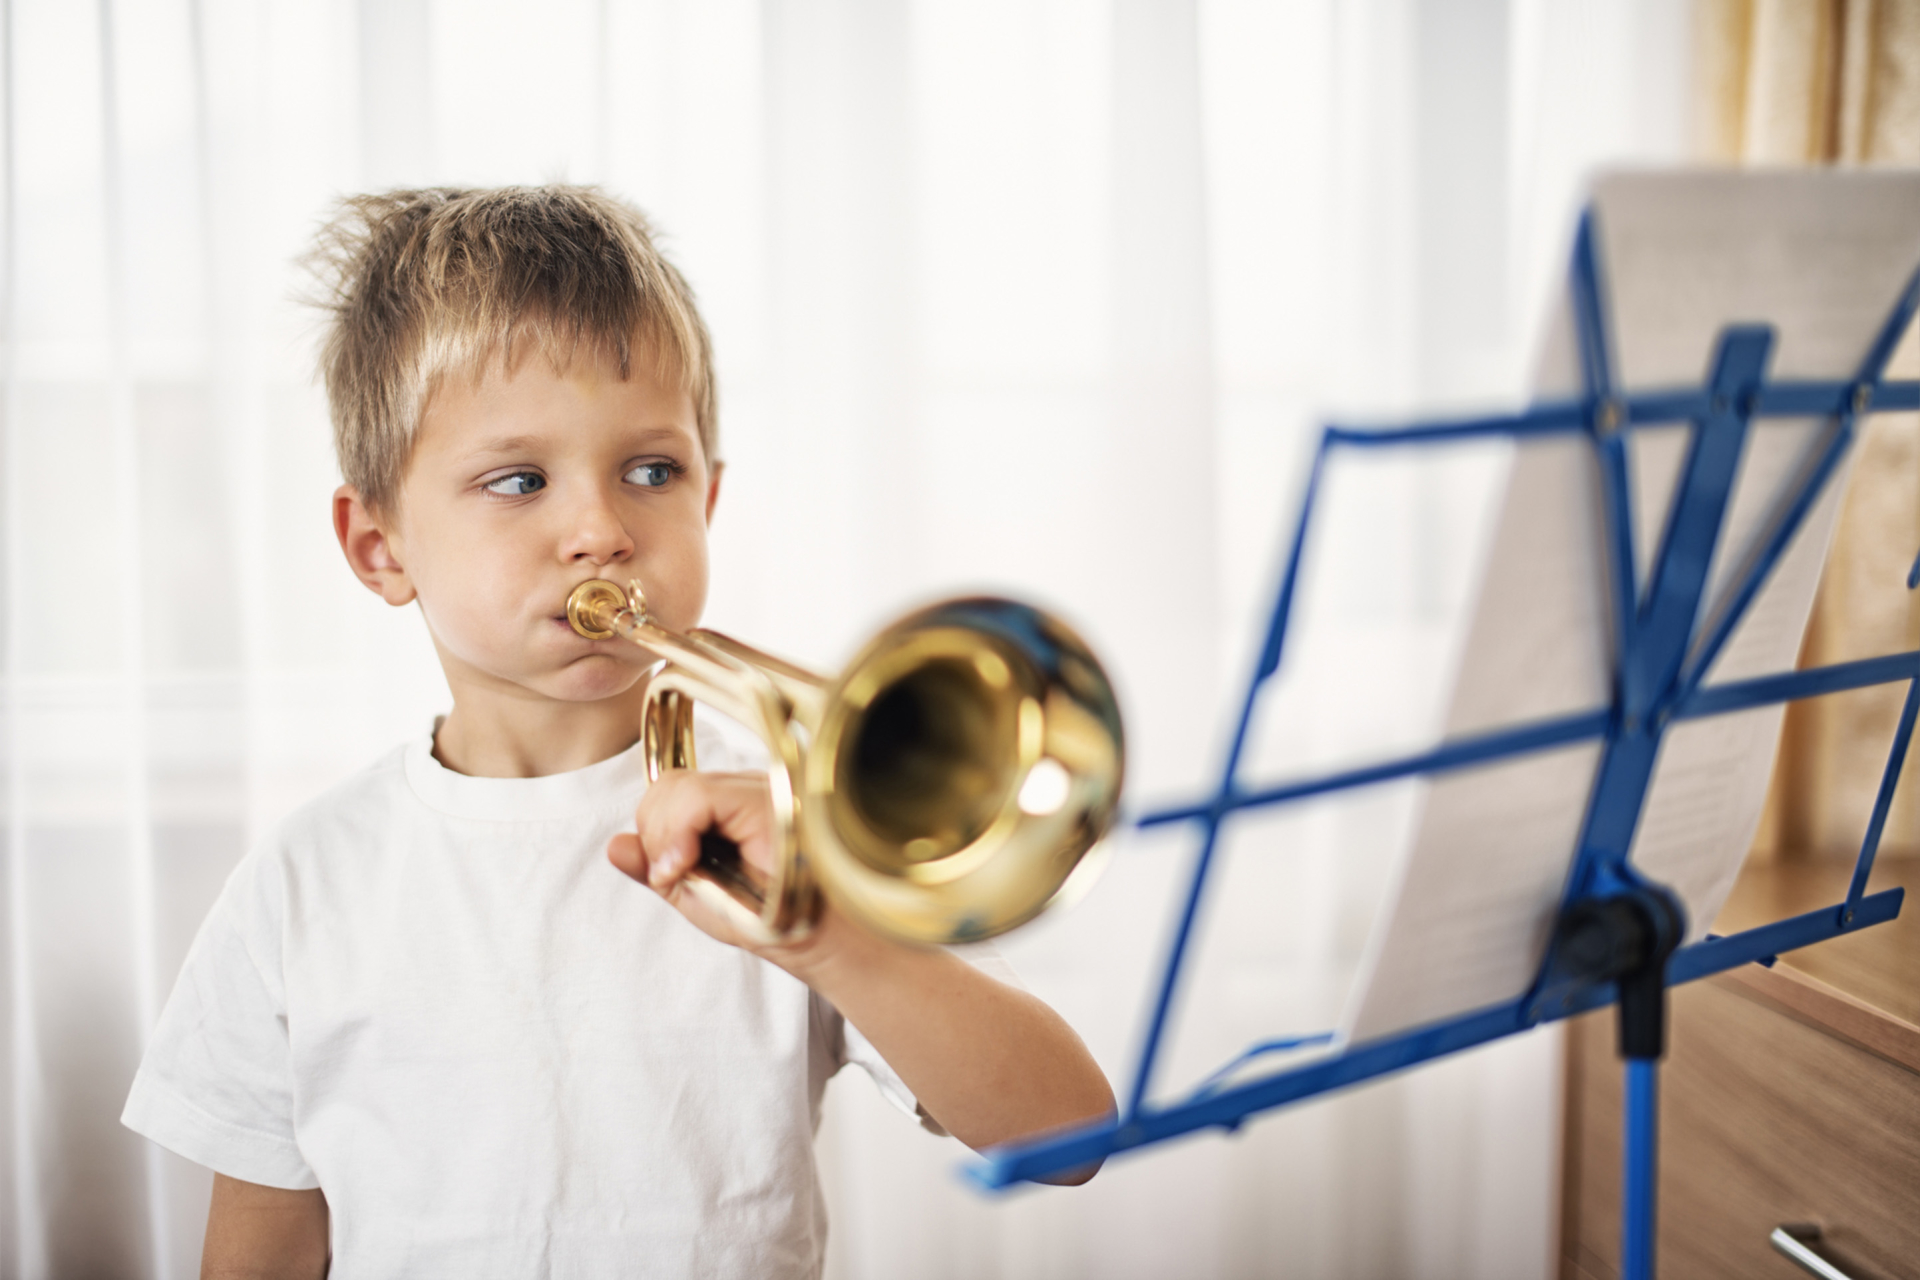 Boy playing Trumpet